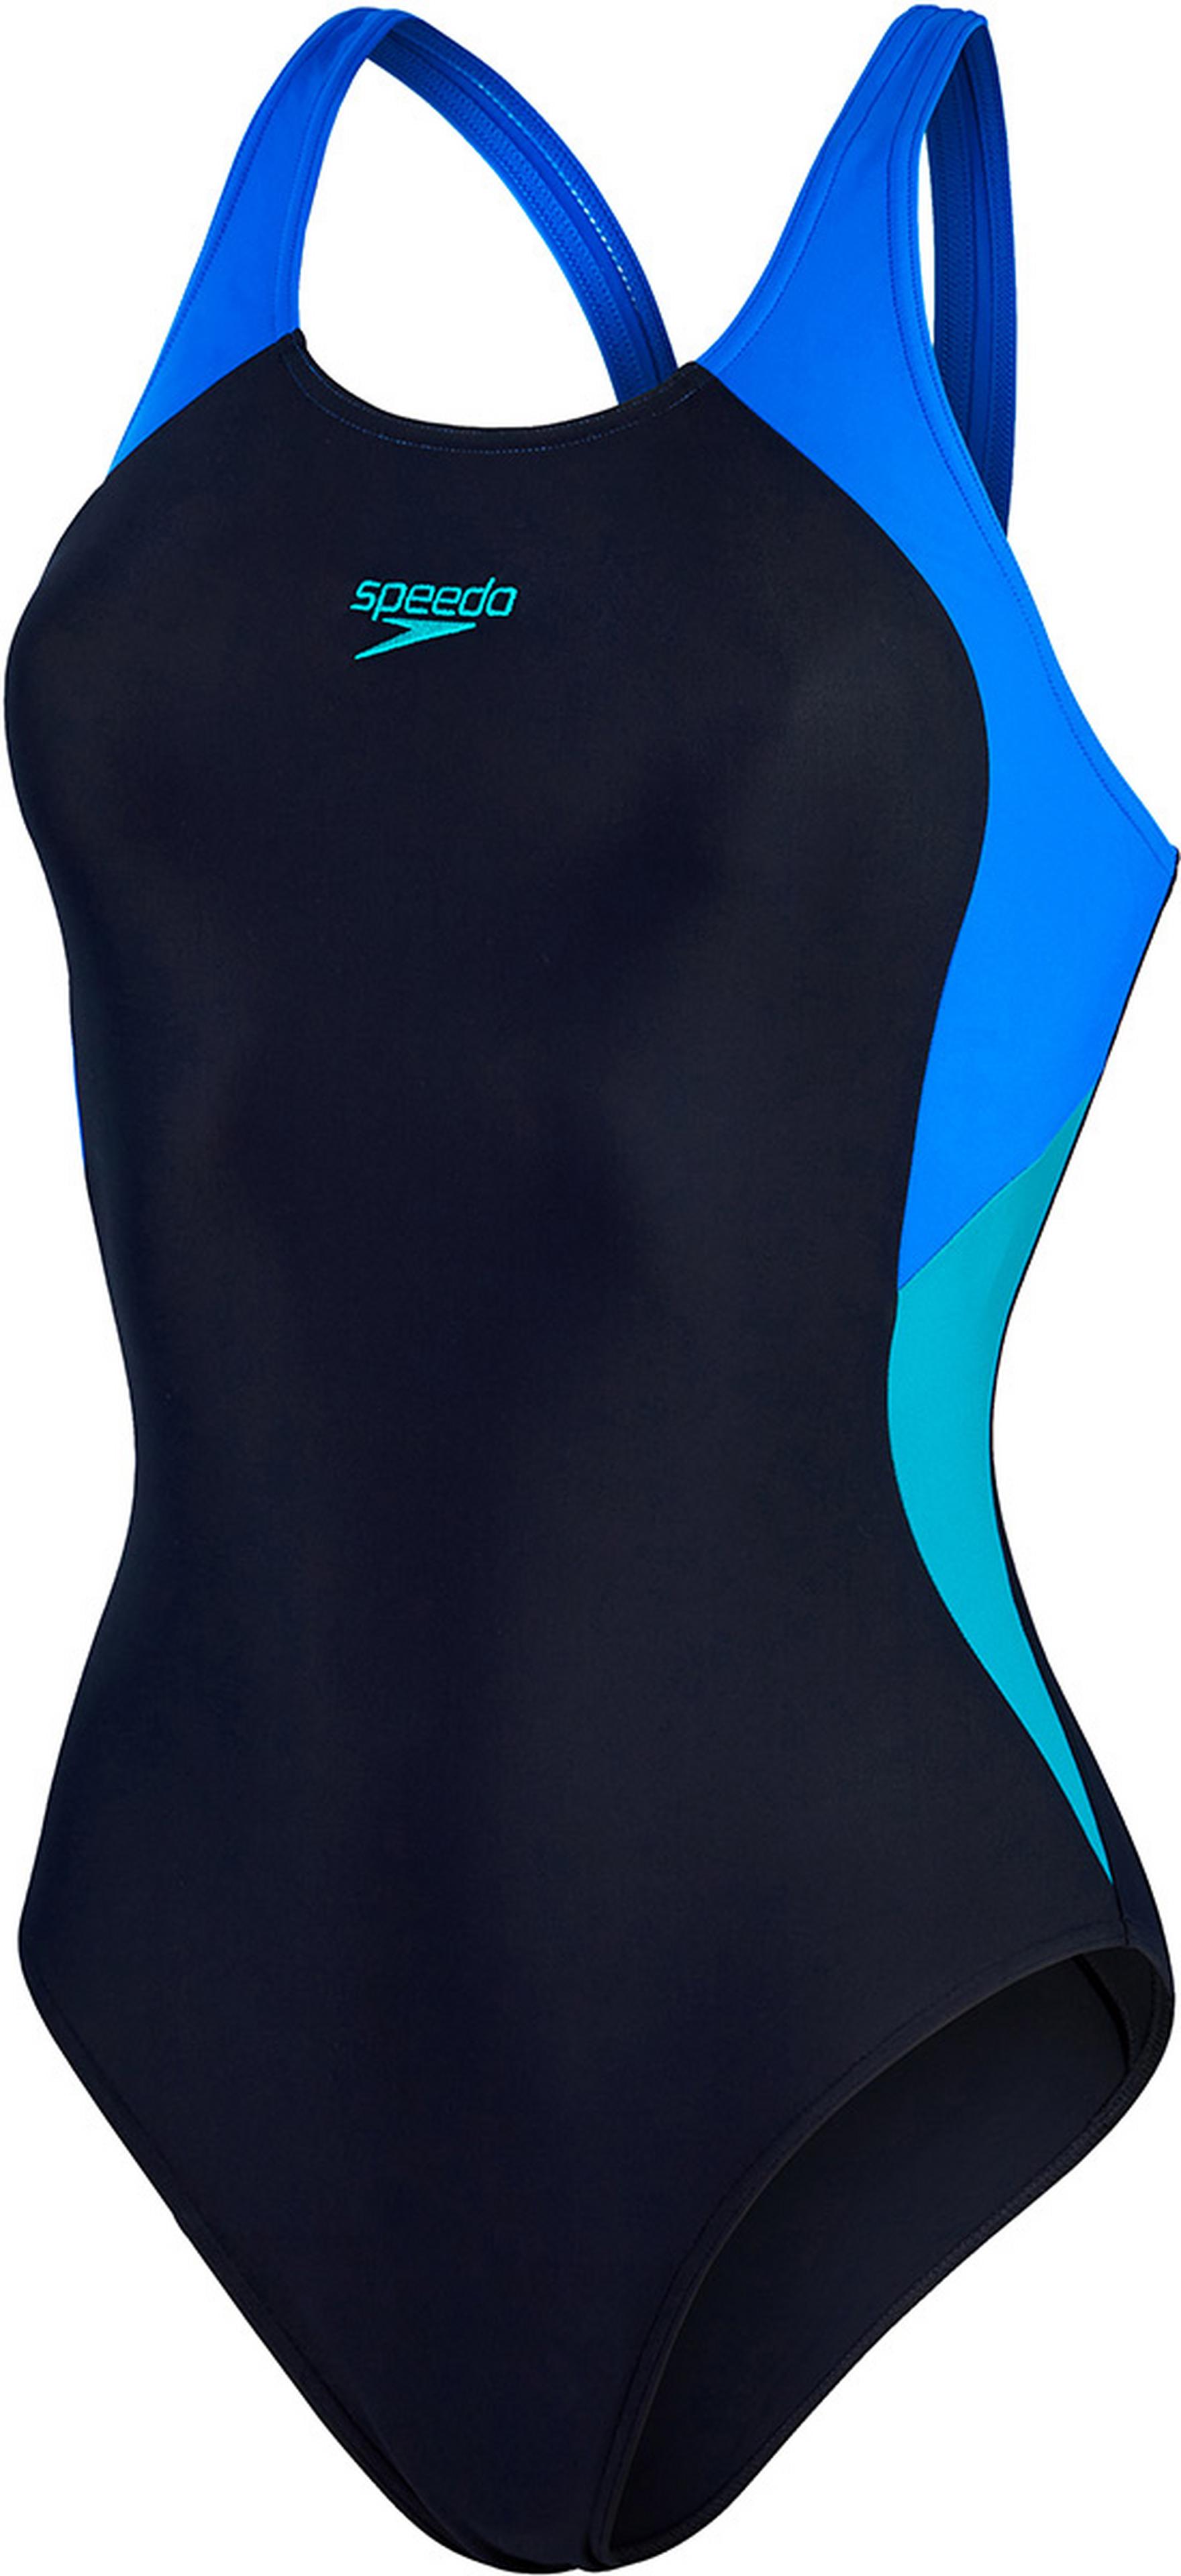 Speedo Women's Colourblock Splice Muscleback Swimsuit